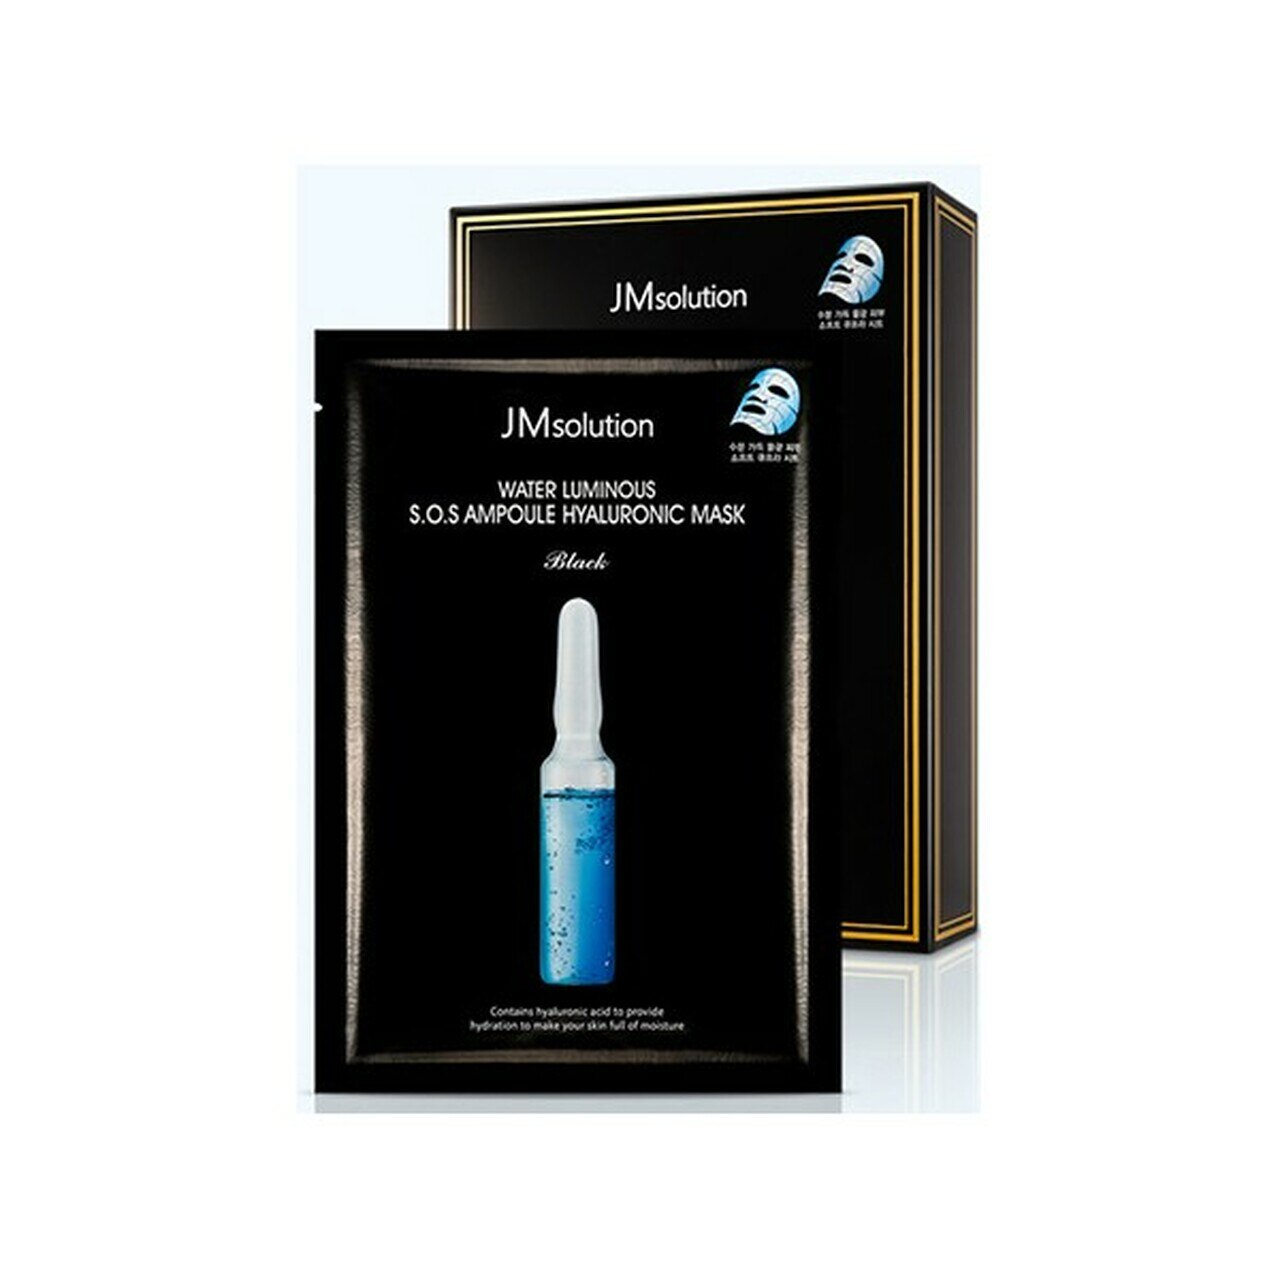 jm-solution-water-luminous-s-o-s-ampoule-hyaluronic-mask-black-box